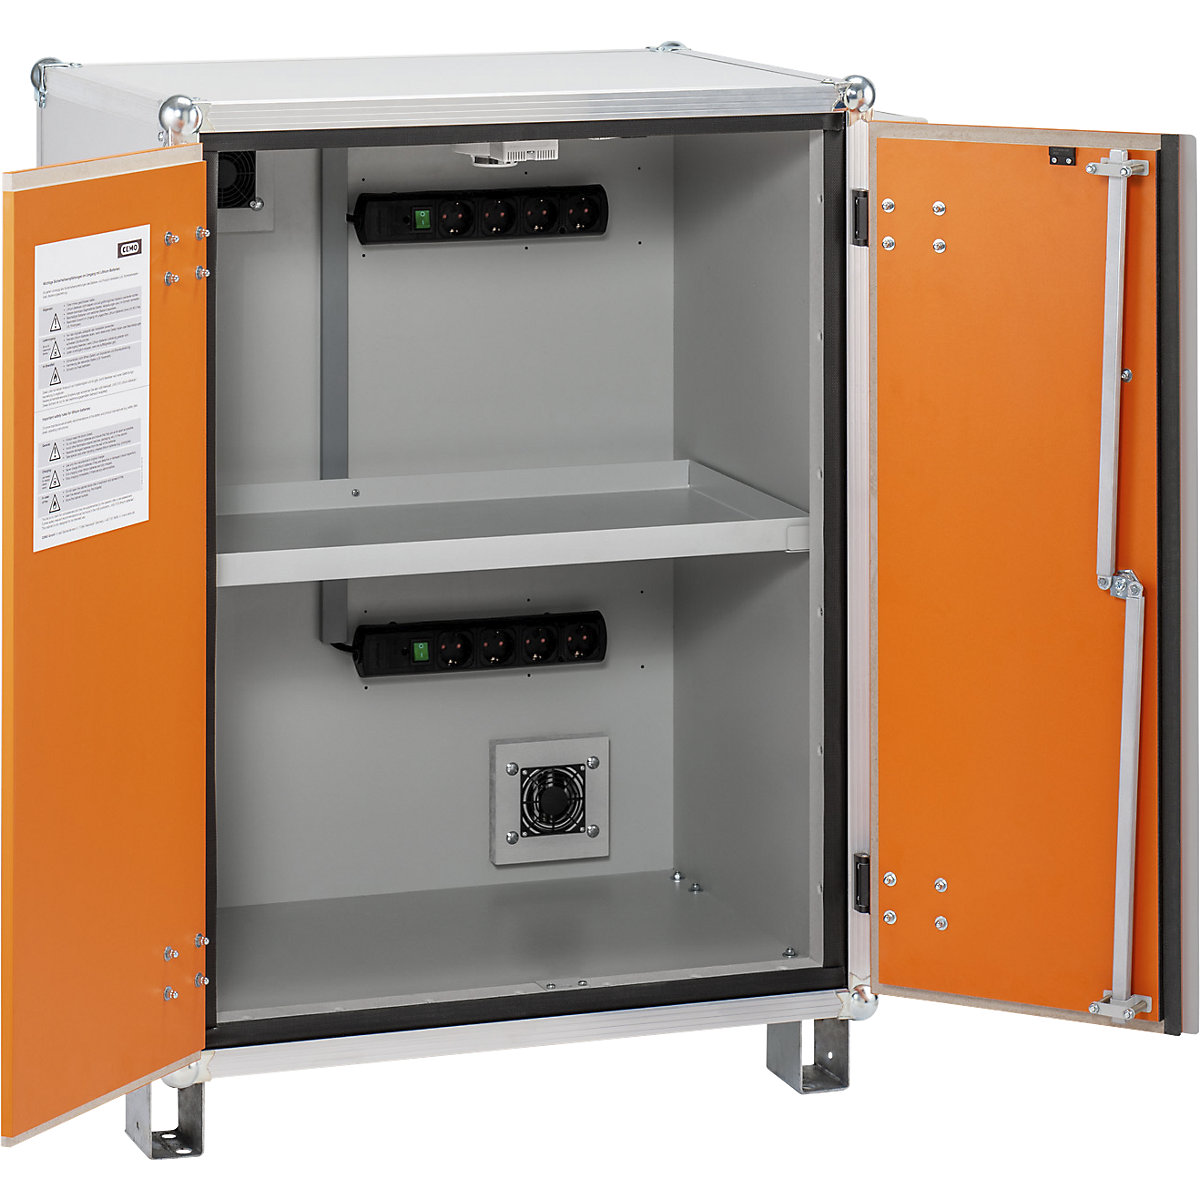 PREMIUM PLUS safety battery charging cabinet – CEMO, DxH 660 x 1110 mm, 400 V, orange/grey-1